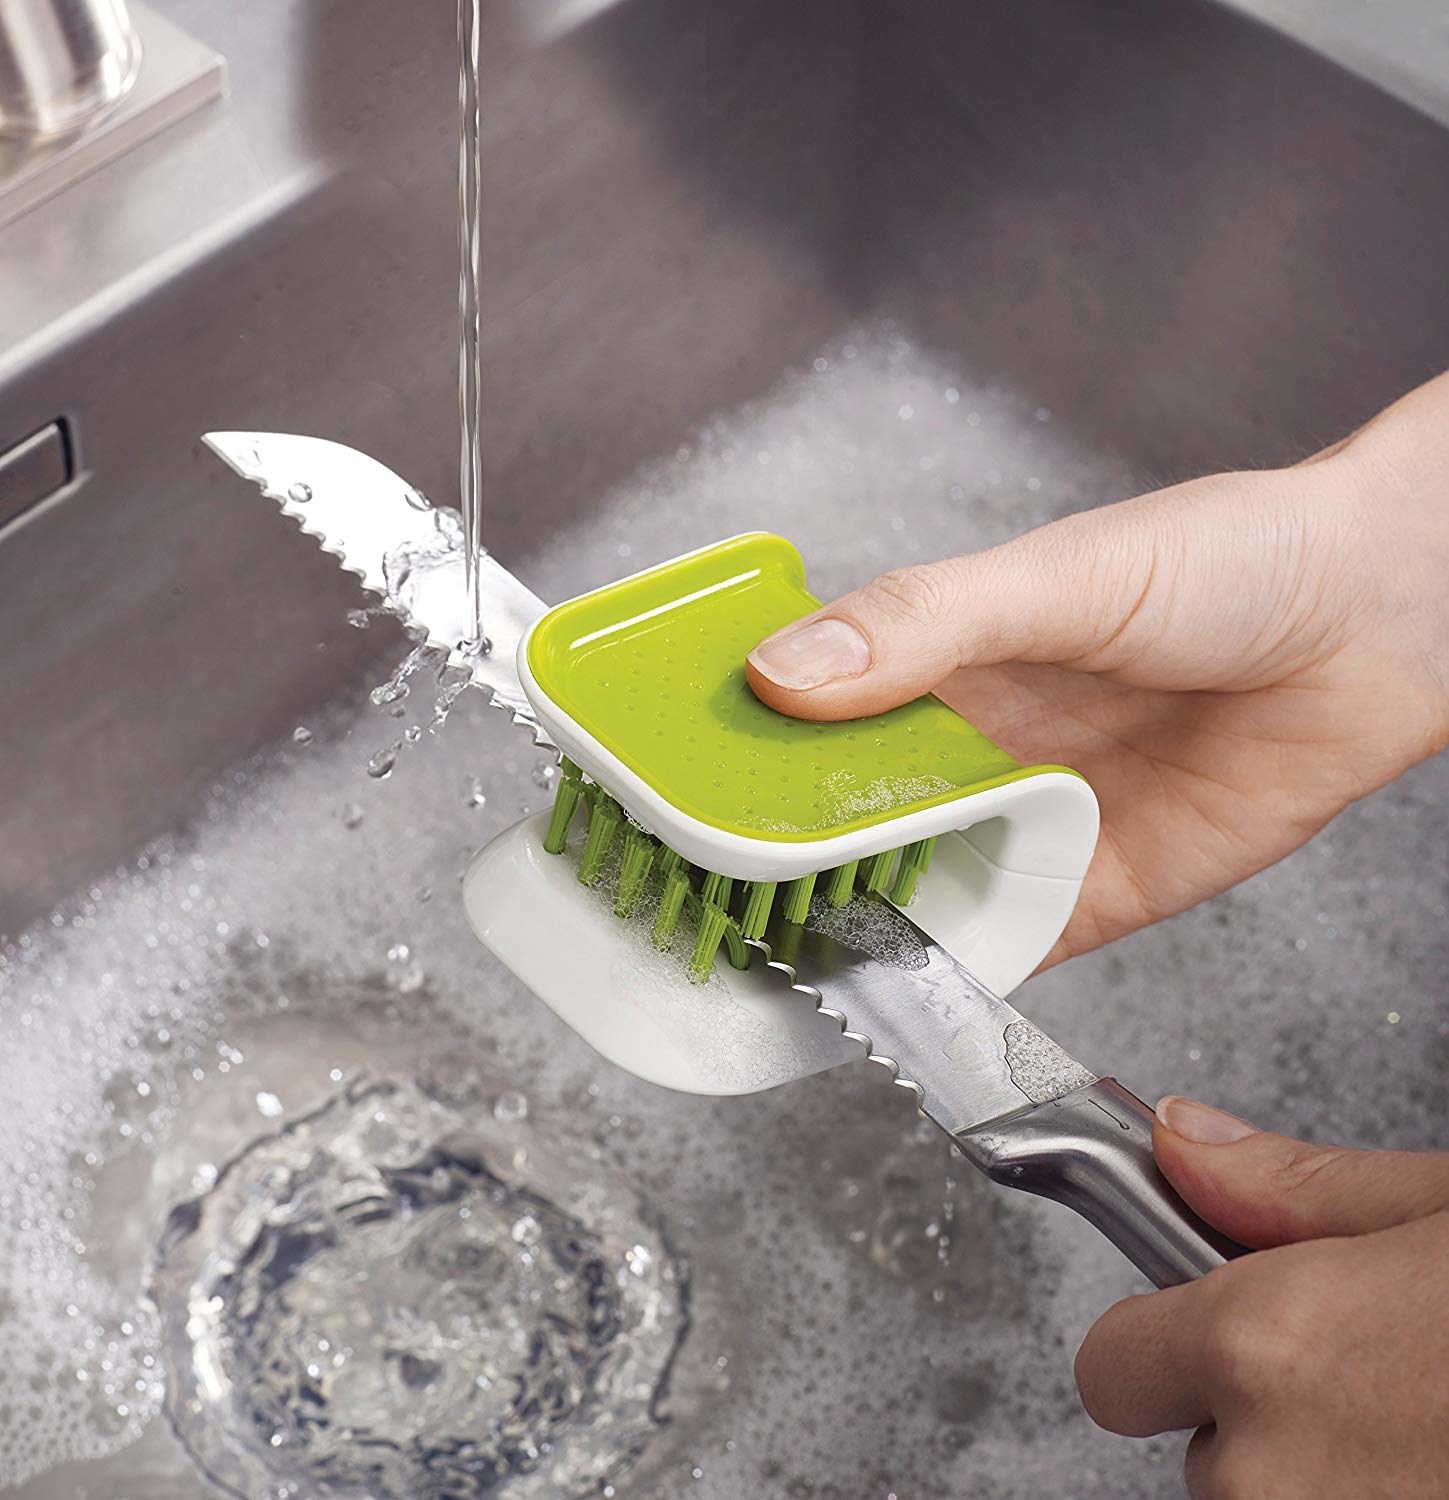 11 Kitchen Tools that Make Washing Dishes Easier